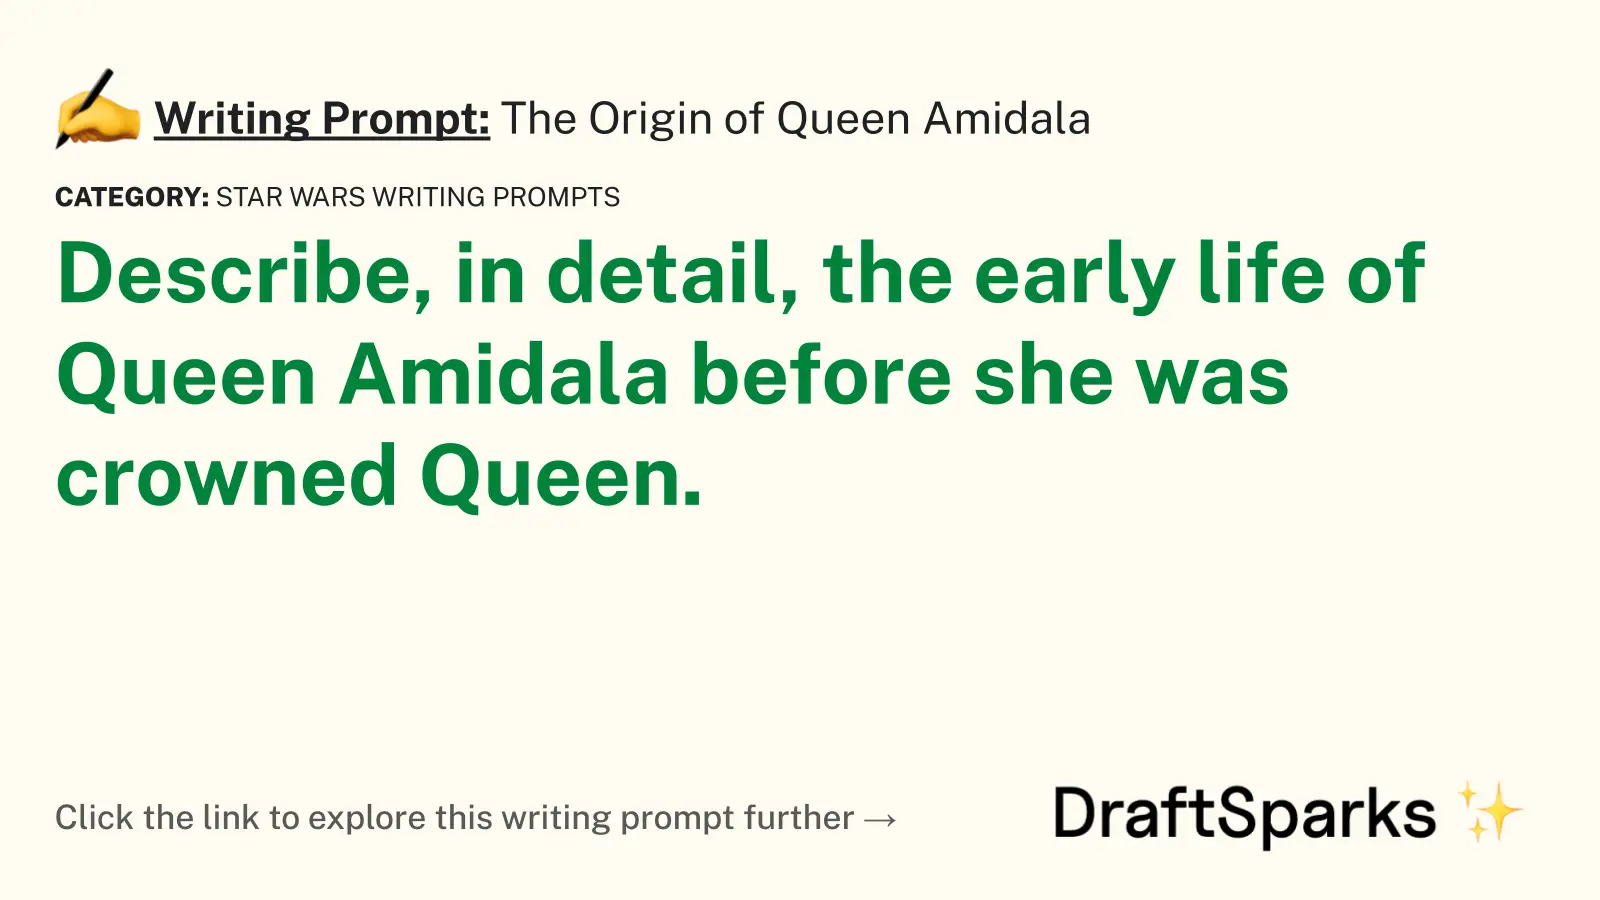 The Origin of Queen Amidala